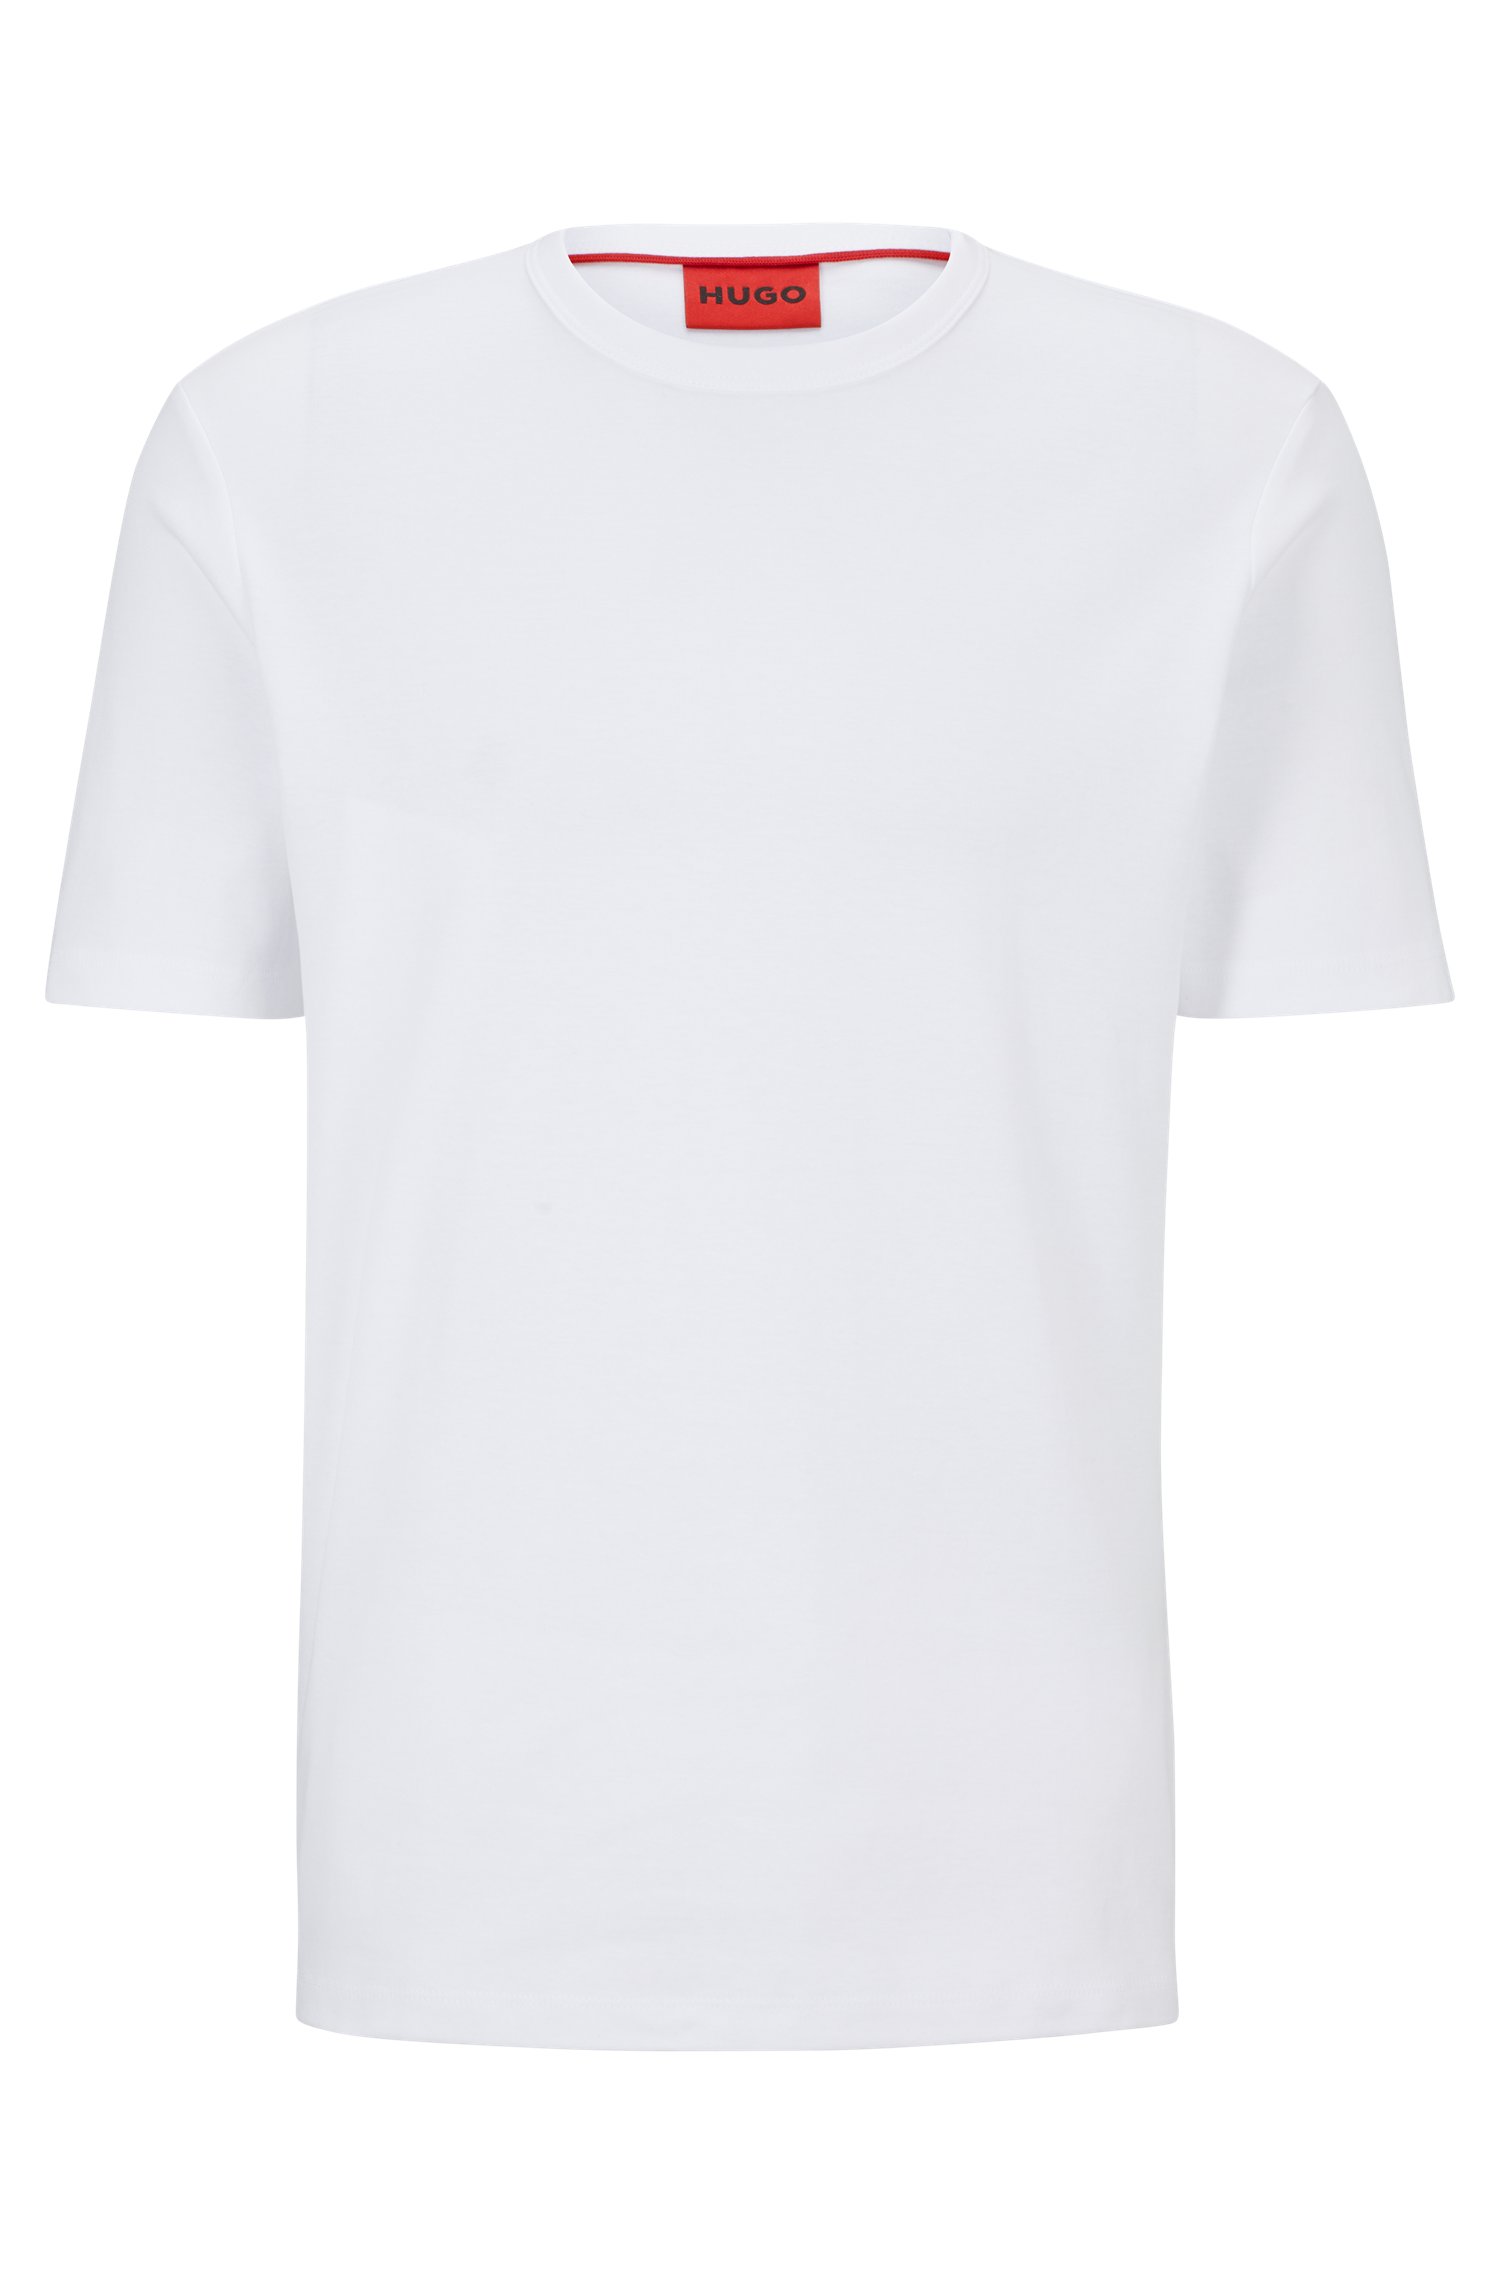 Футболка Hugo Pima-cotton Regular-fit With Contrast Logo, белый футболка hugo pima cotton regular fit with contrast logo белый